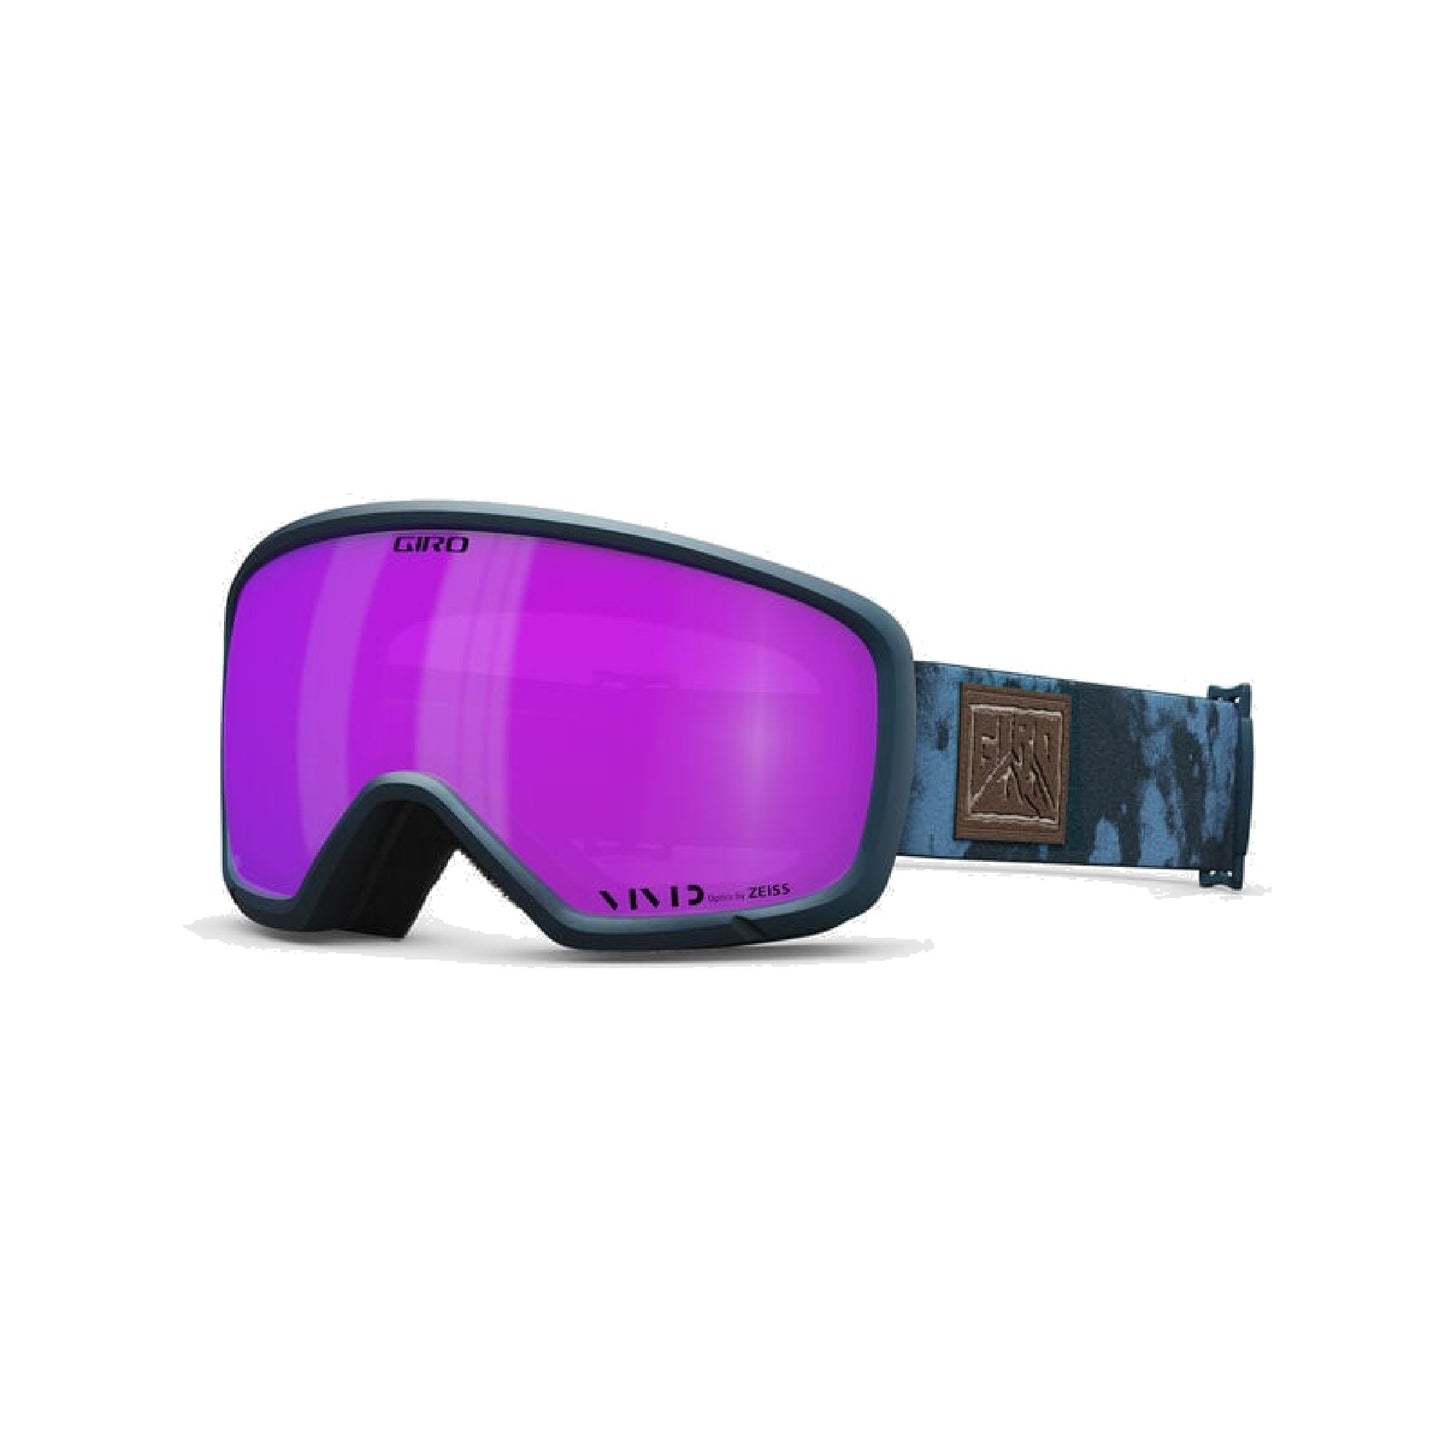 Giro Women's Millie Snow Goggles Ano Harbor Blue Cloud Dust/Vivid Pink Snow Goggles